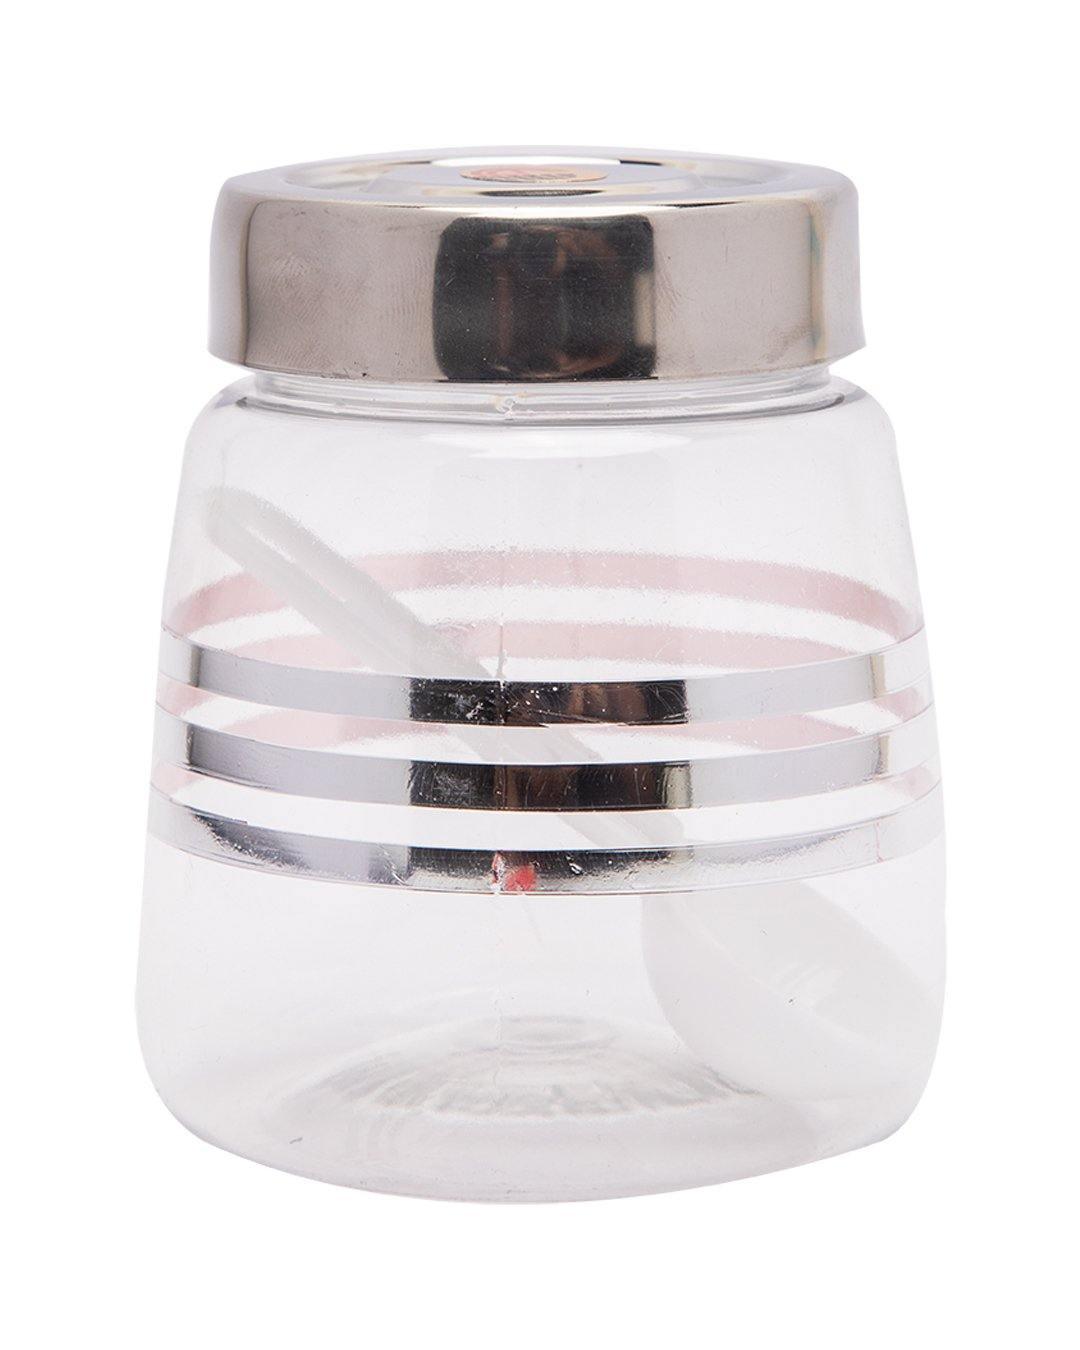 Jars, Transparent & Silver, Plastic, Set of 6, 200 mL - MARKET 99